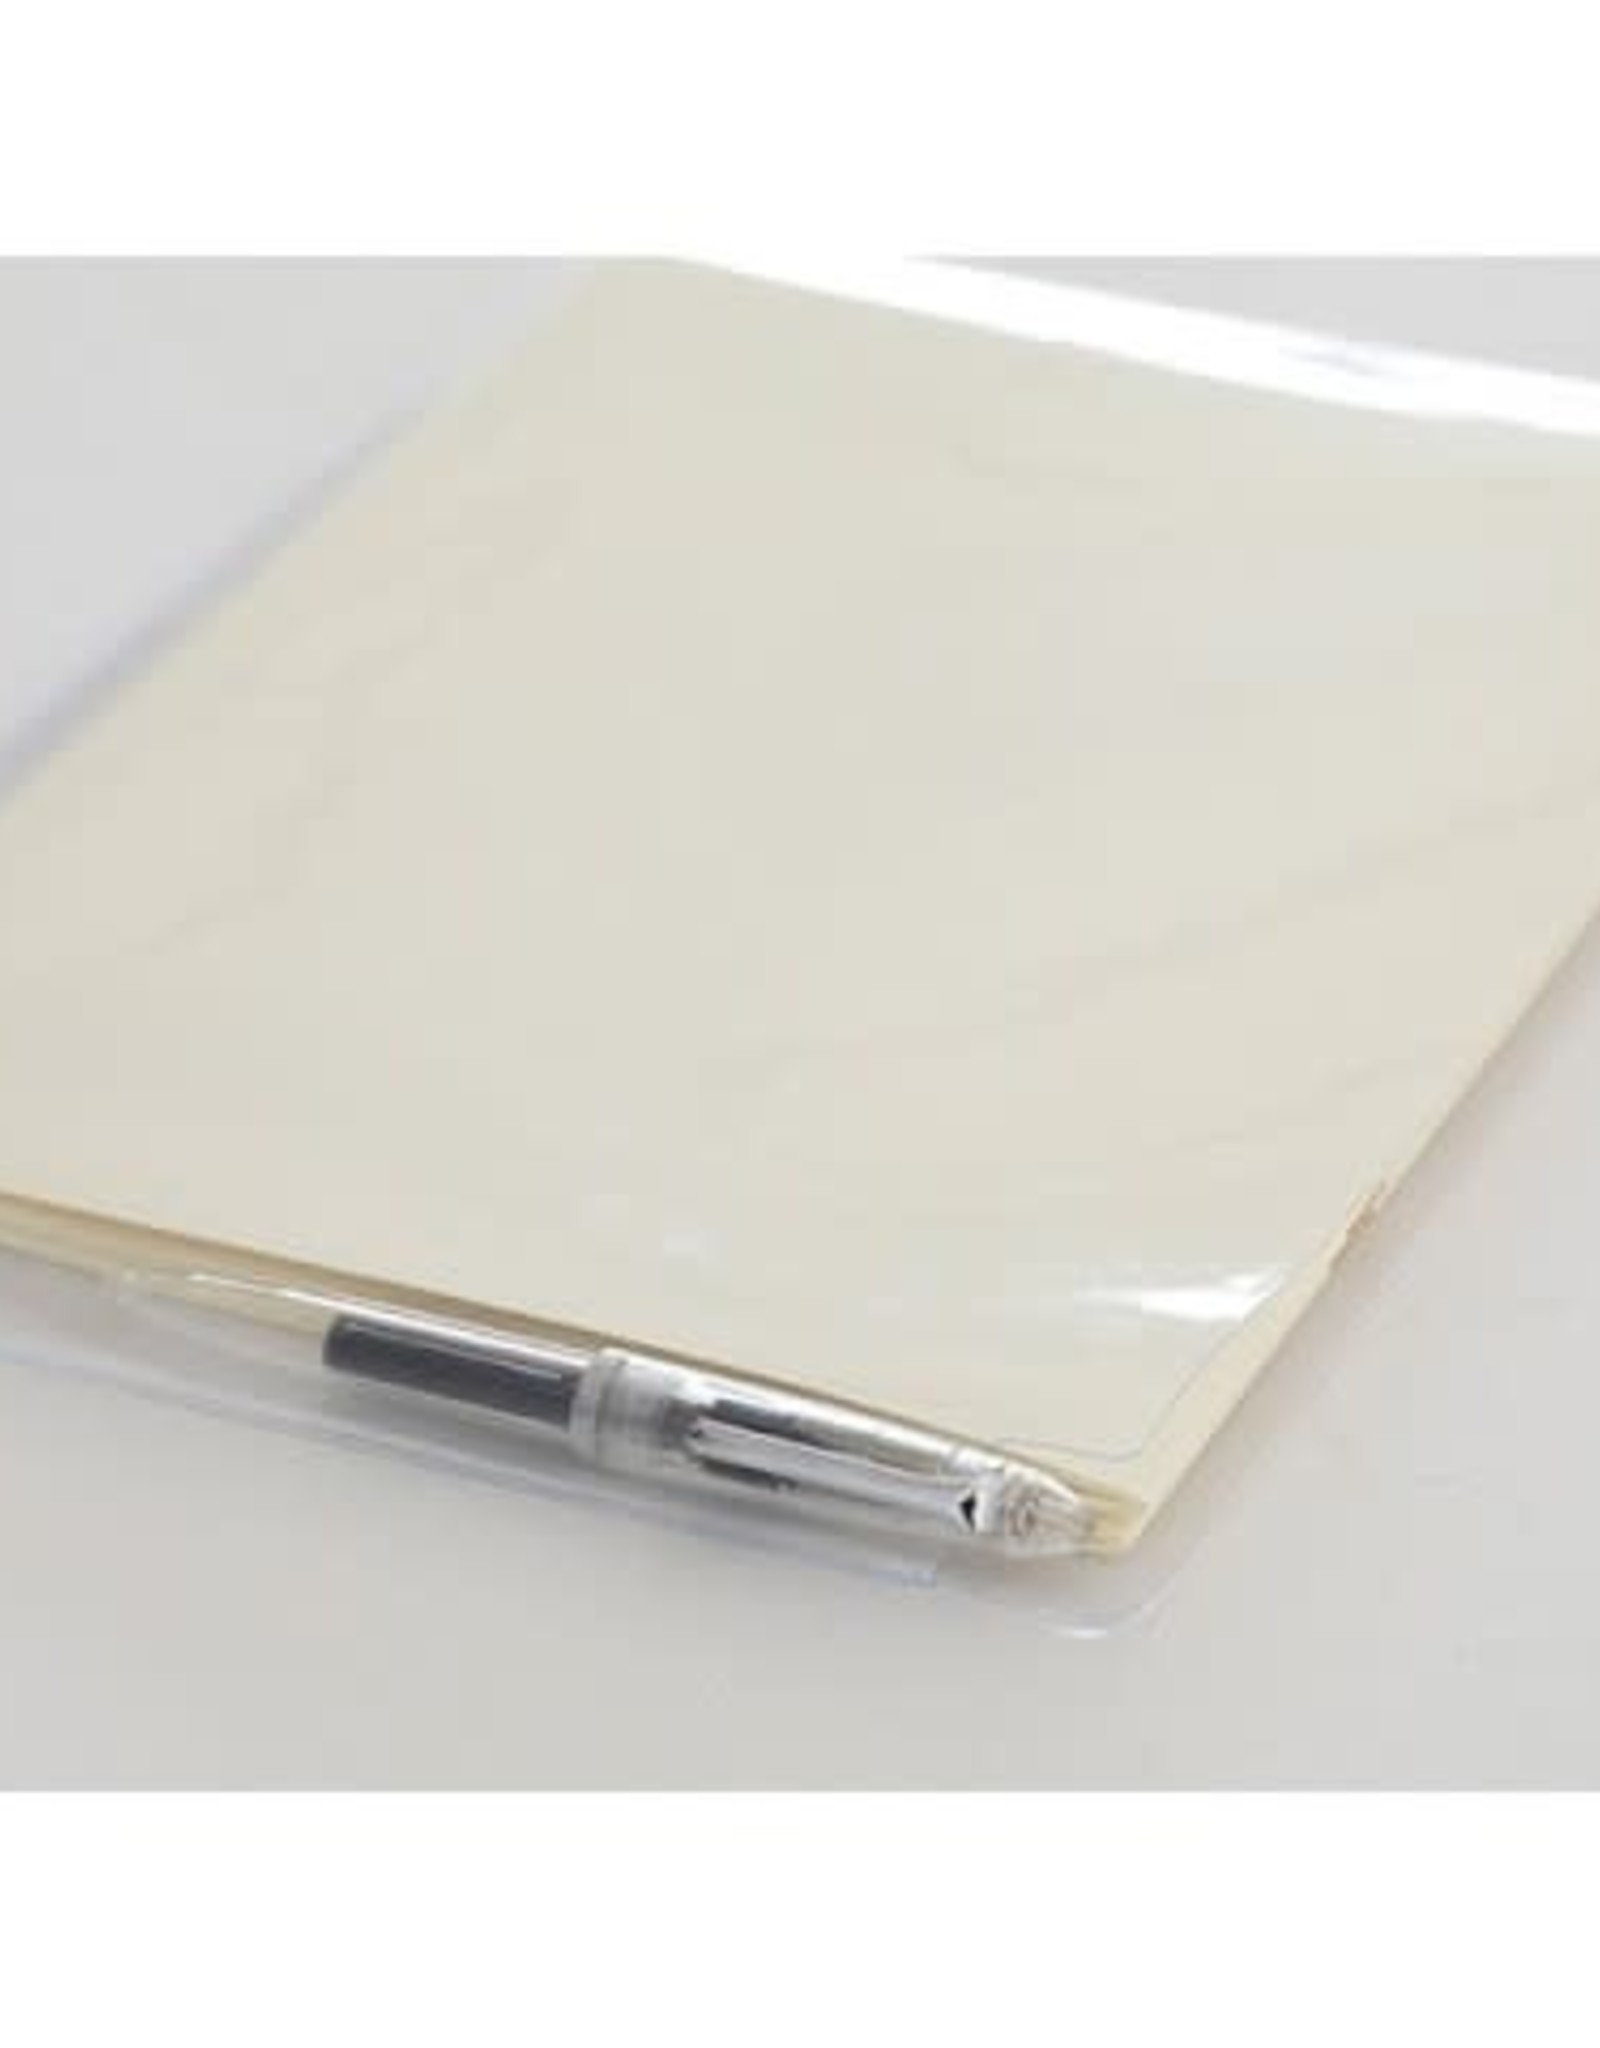 Midori MD, Notebook Bag PVC A4 Horizontal